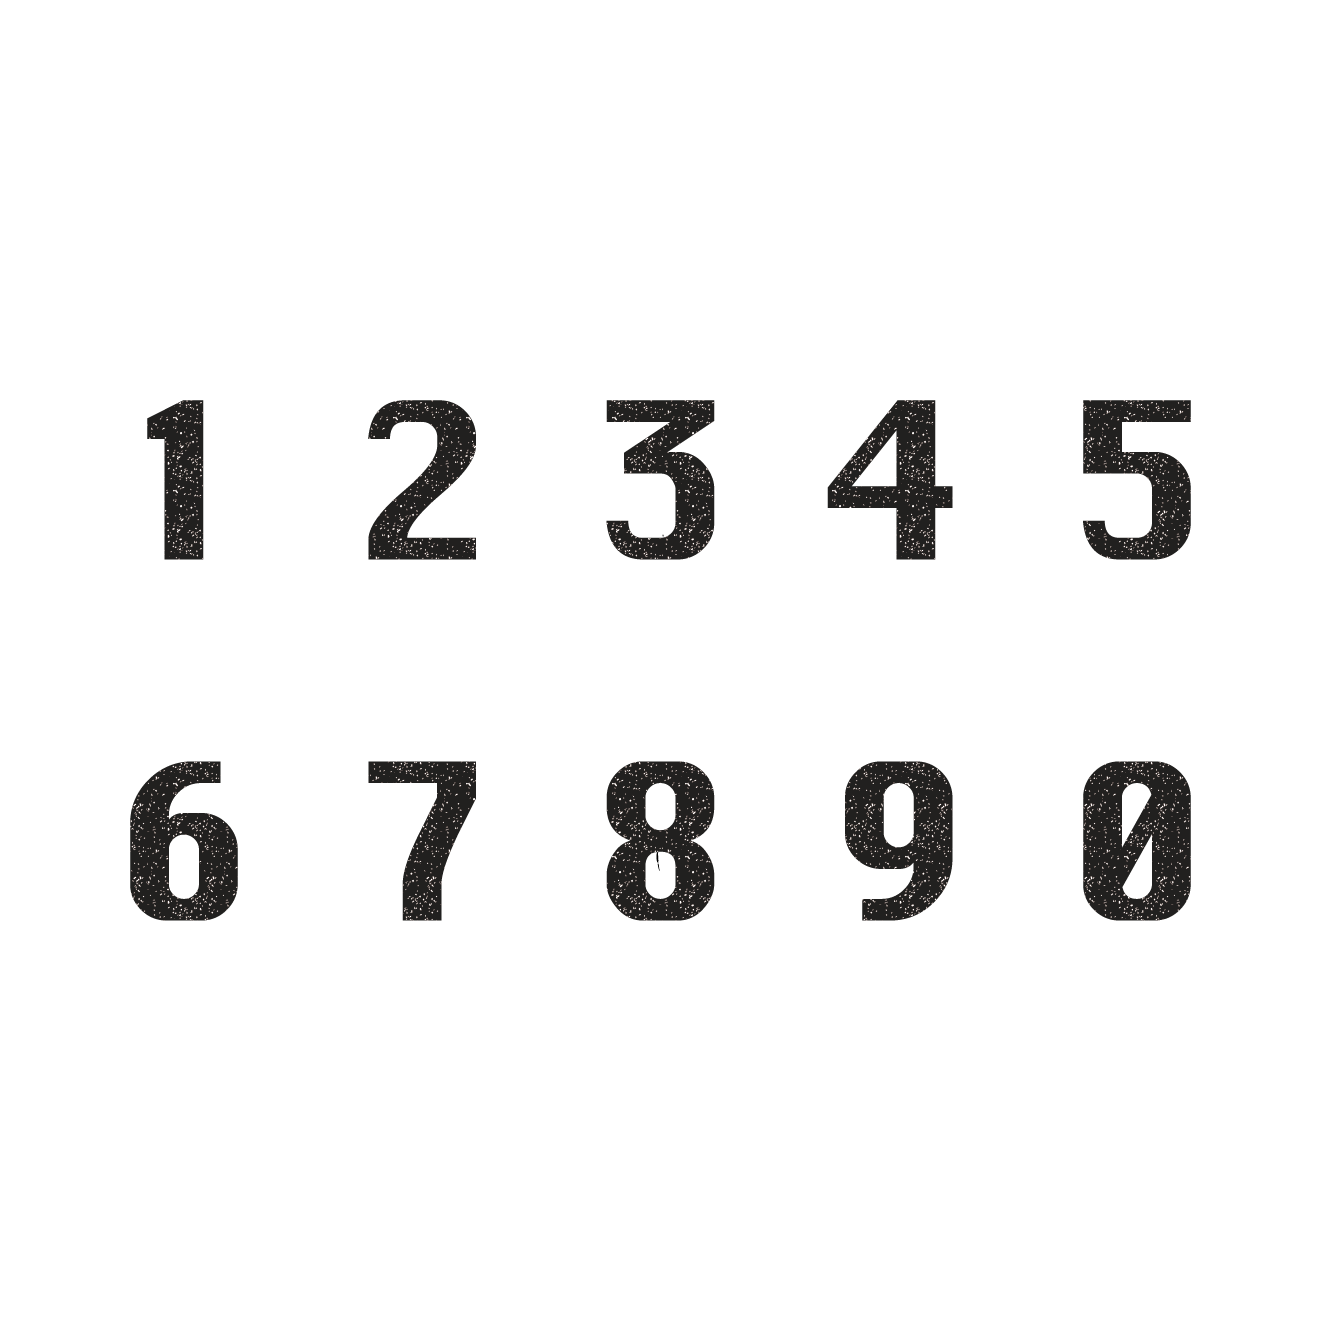 تصویر اعداد ریاضی برای چاپ